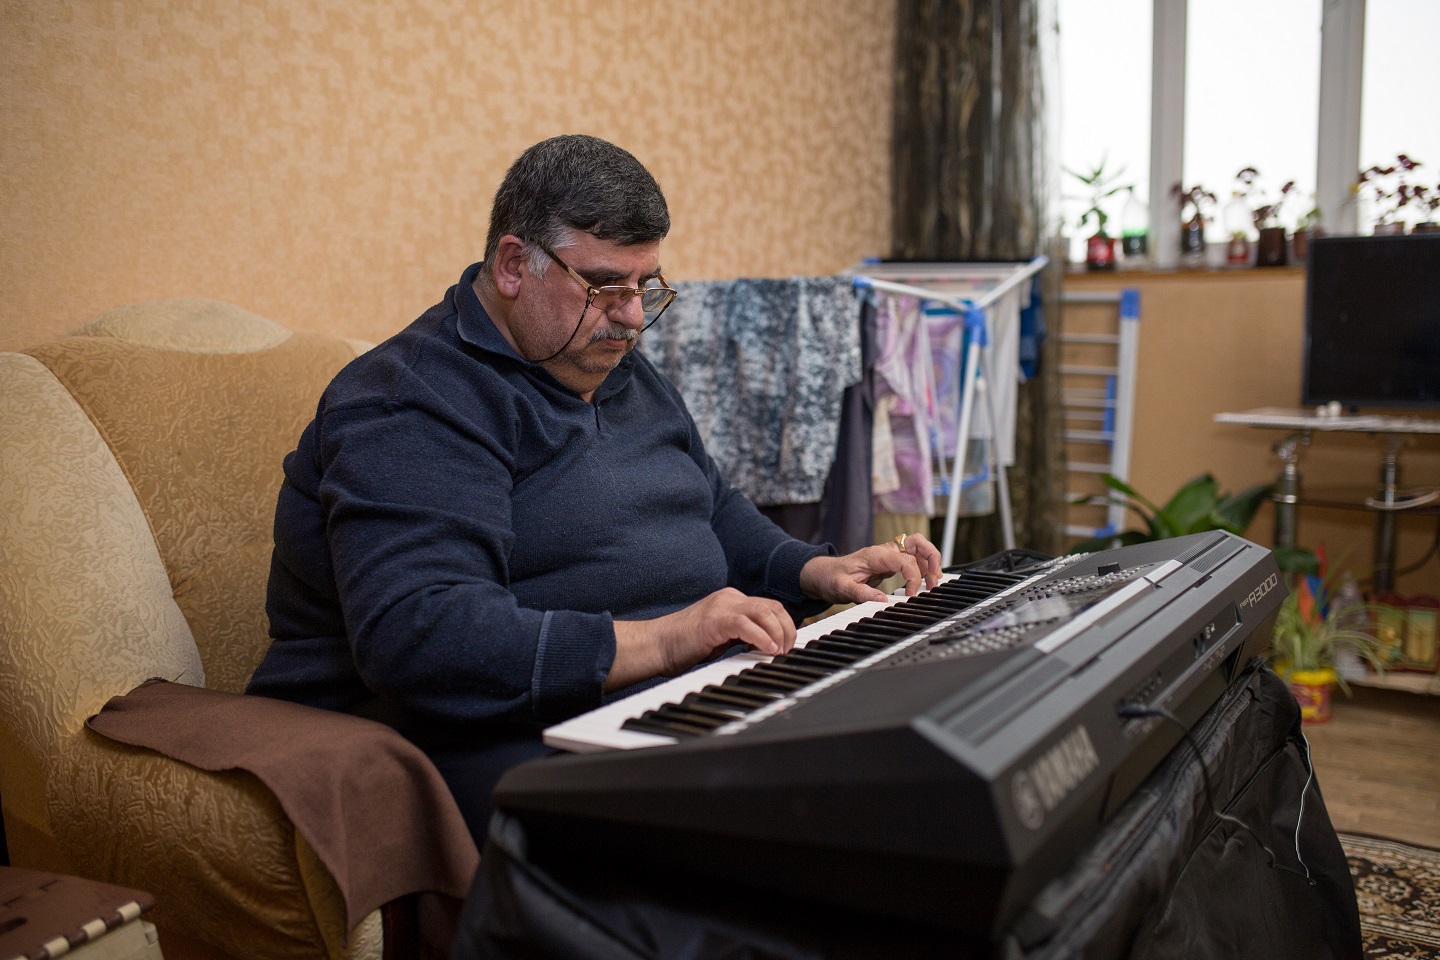 Garo playing a traditional Armenian melody on his keyboards © UNHCR/Areg Balayan